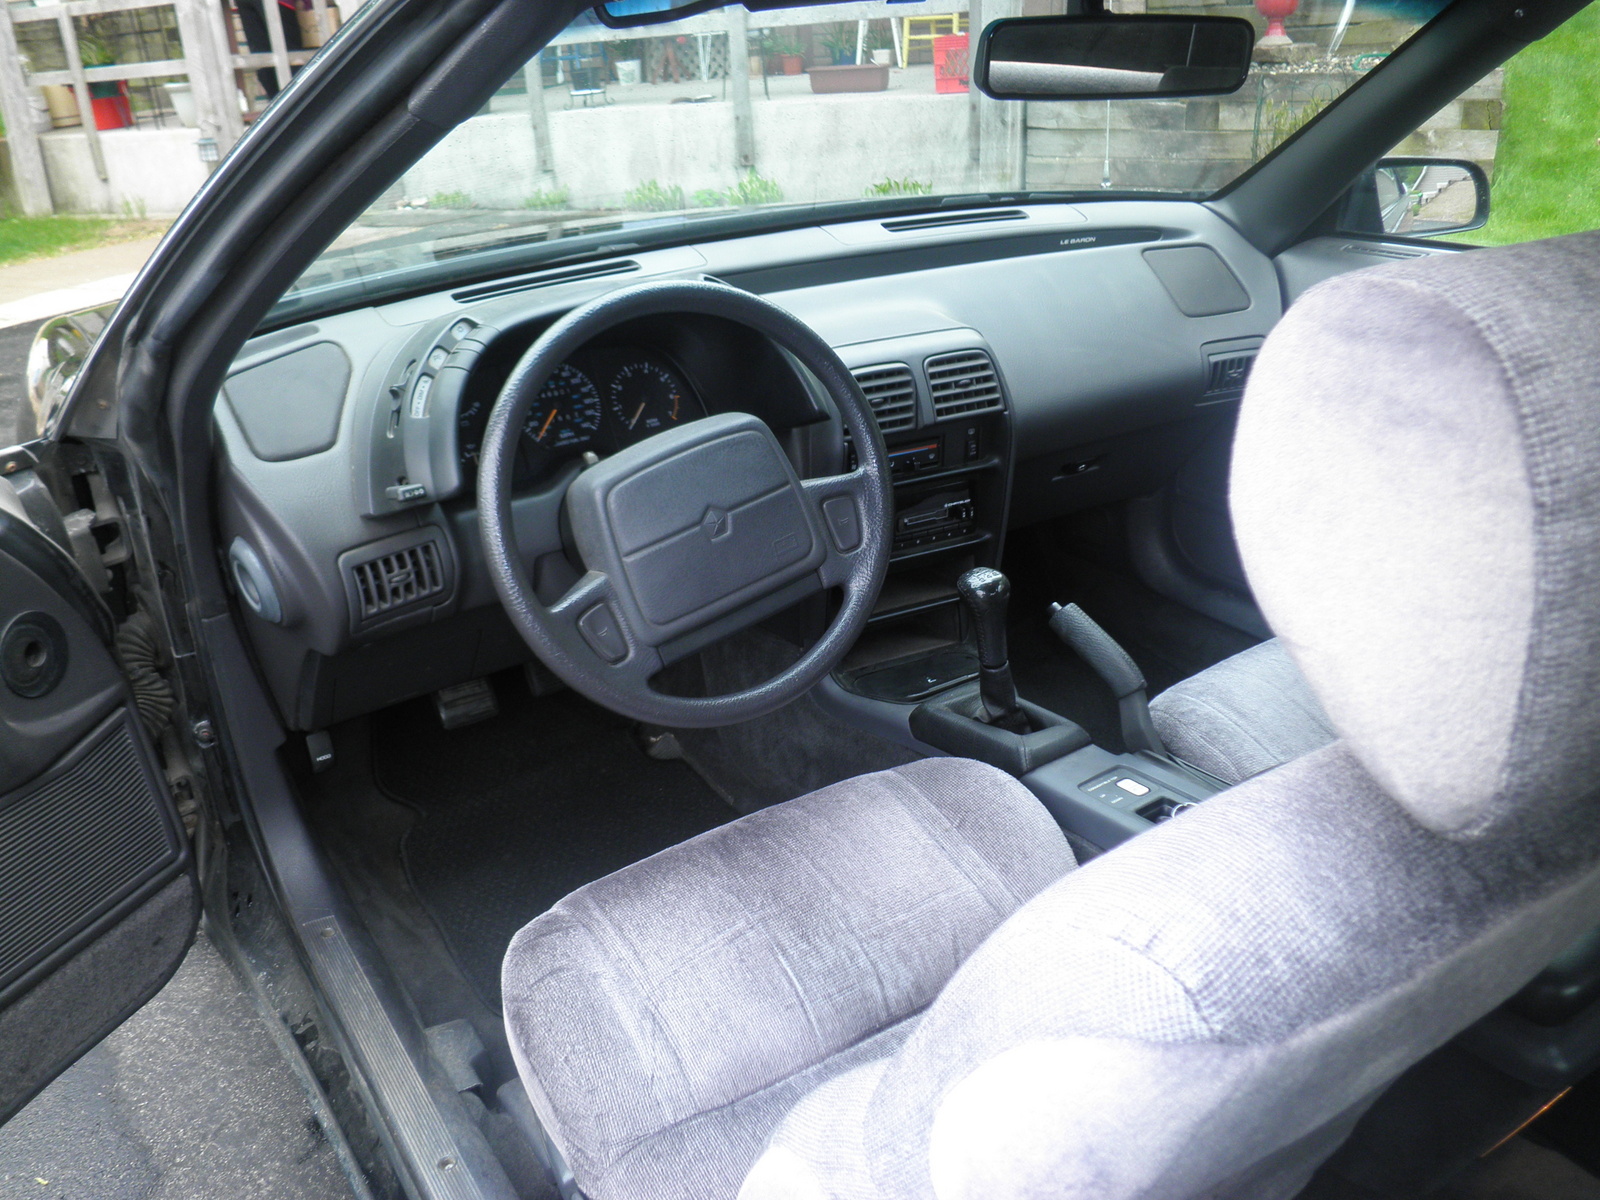 1992 Chrysler lebaron interior #4